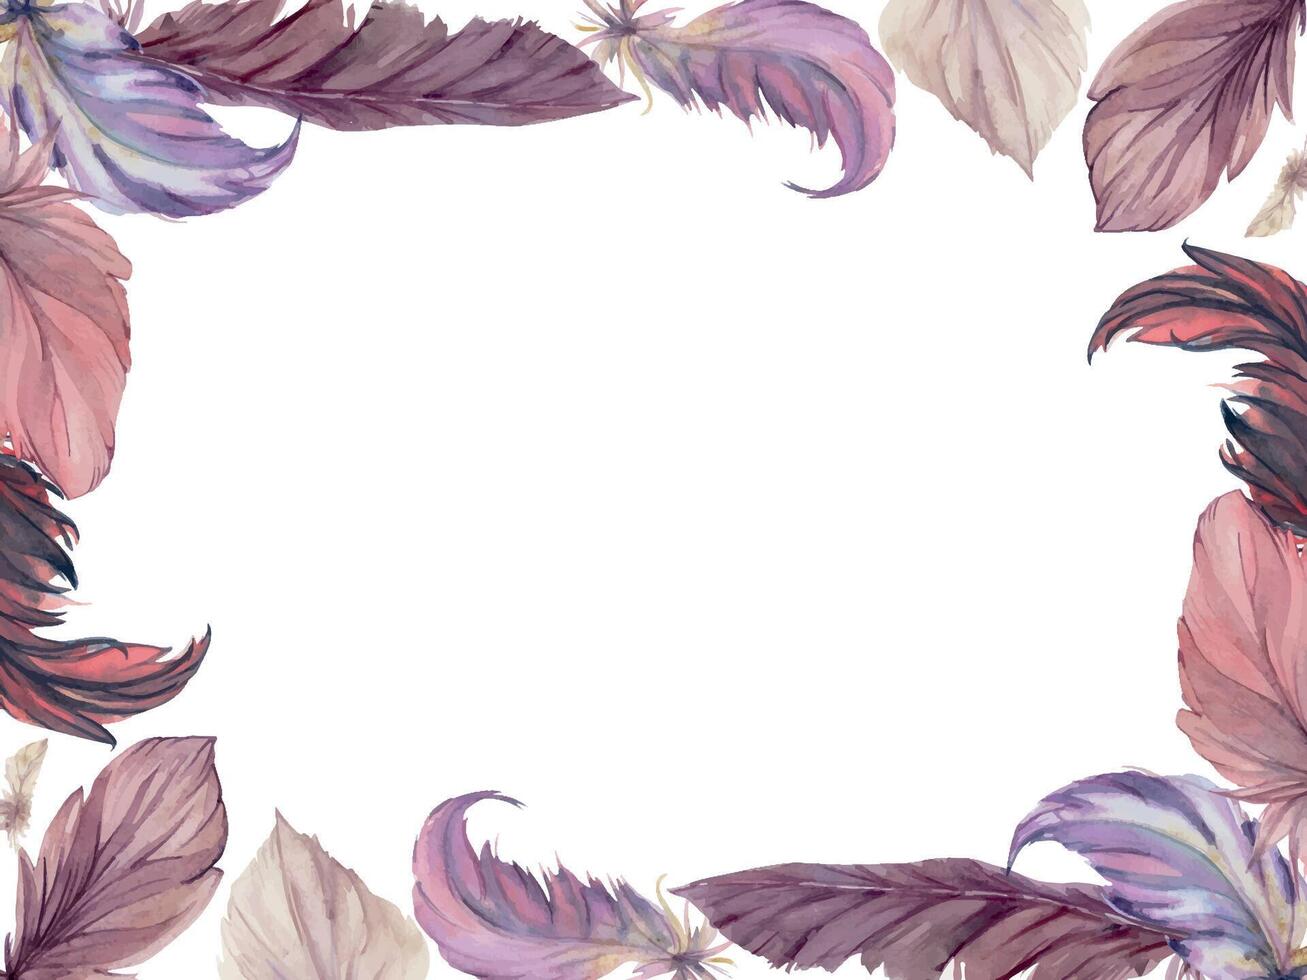 mano dibujado acuarela pájaro pluma penacho pluma boho tribal étnico indio púrpura. horizontal marco aislado en blanco antecedentes. diseño encanto, amuleto, atrapasueños, álbum de recortes, hecho a mano artesanía, tatuaje vector